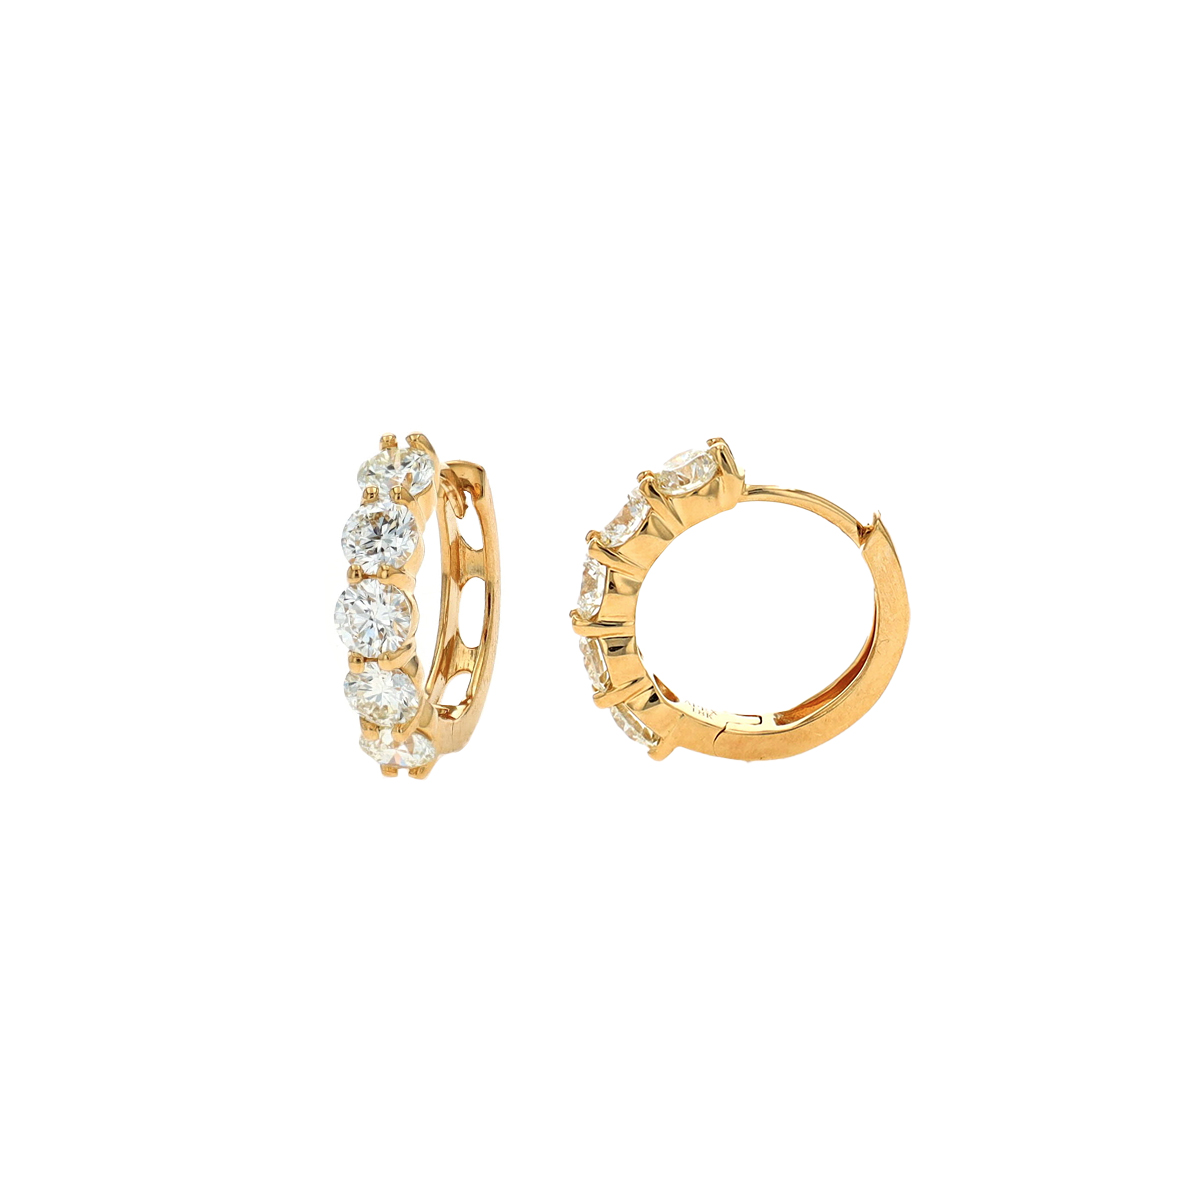 18K Yellow Gold 1.99 Carat Diamond Hoop Earrings